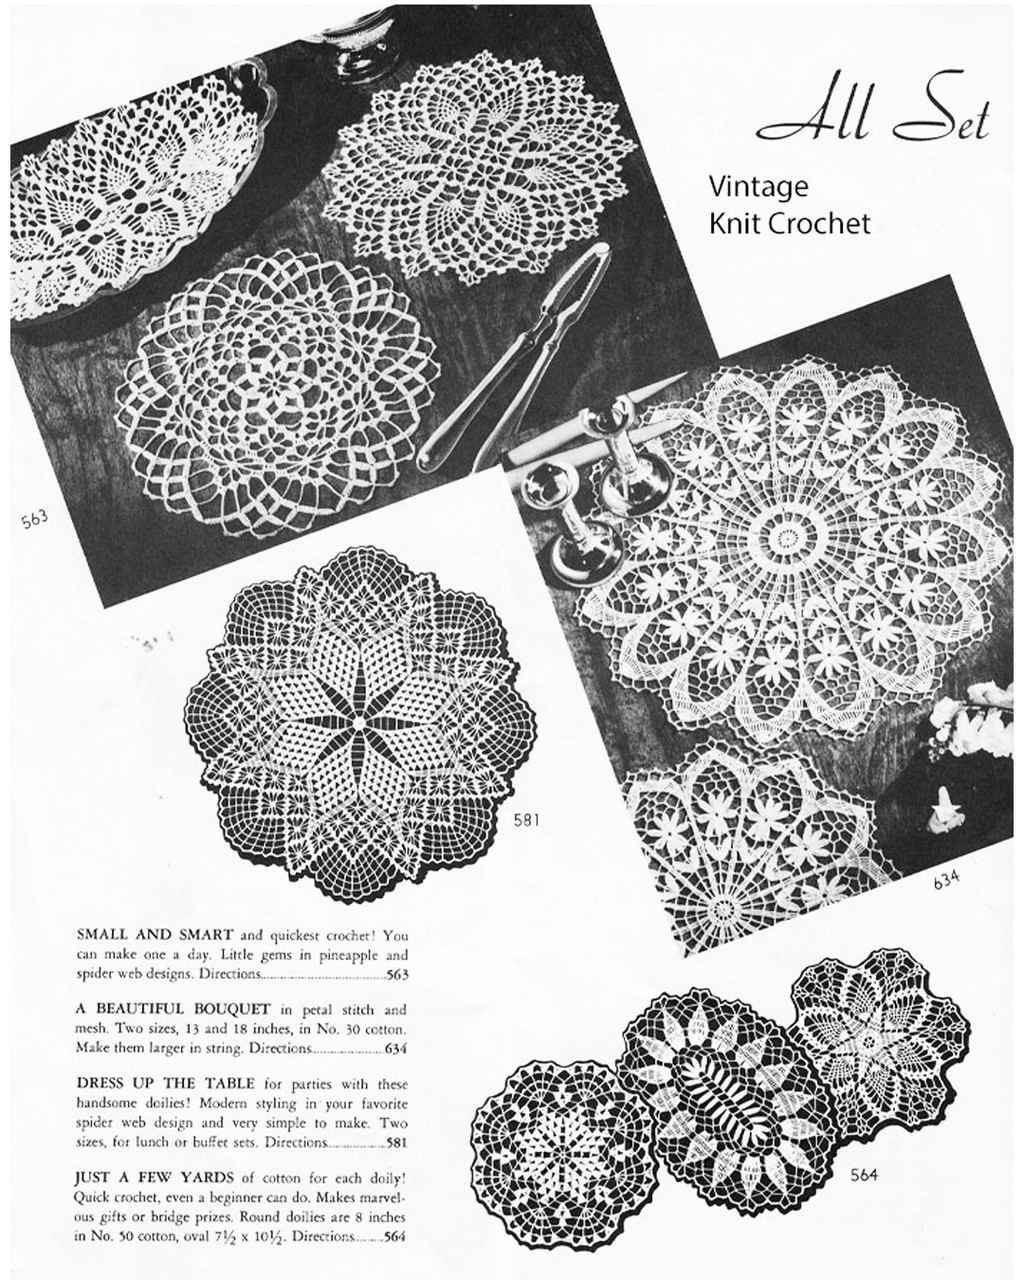 Doily Design 563 in the 1952 Laura Wheeler Designs Catalog